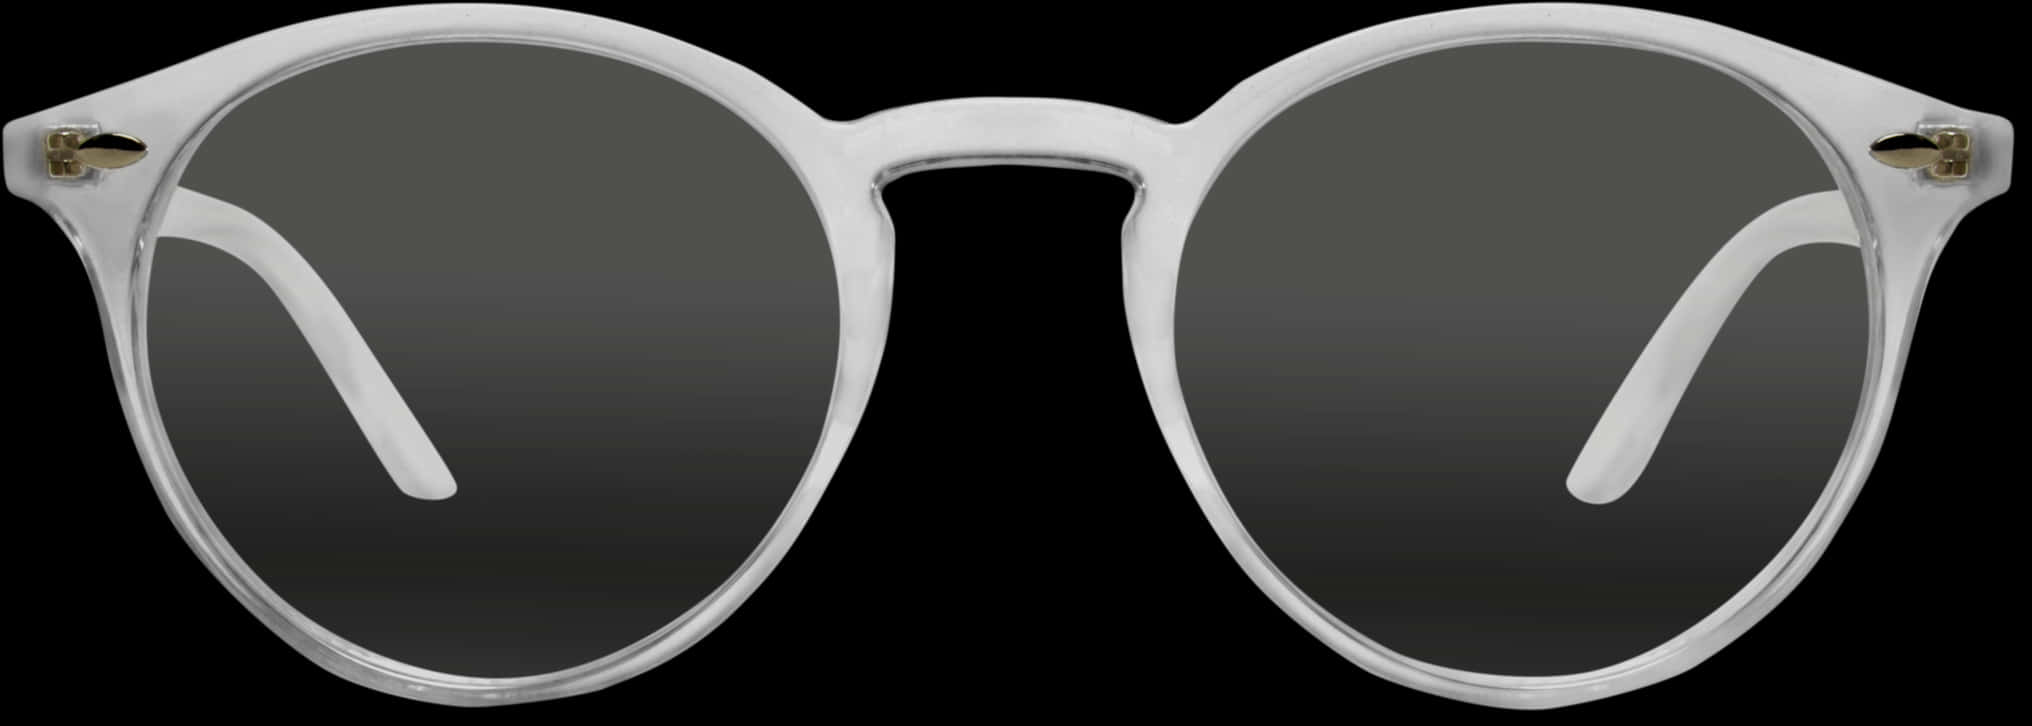 White Round Framed Sunglasses PNG